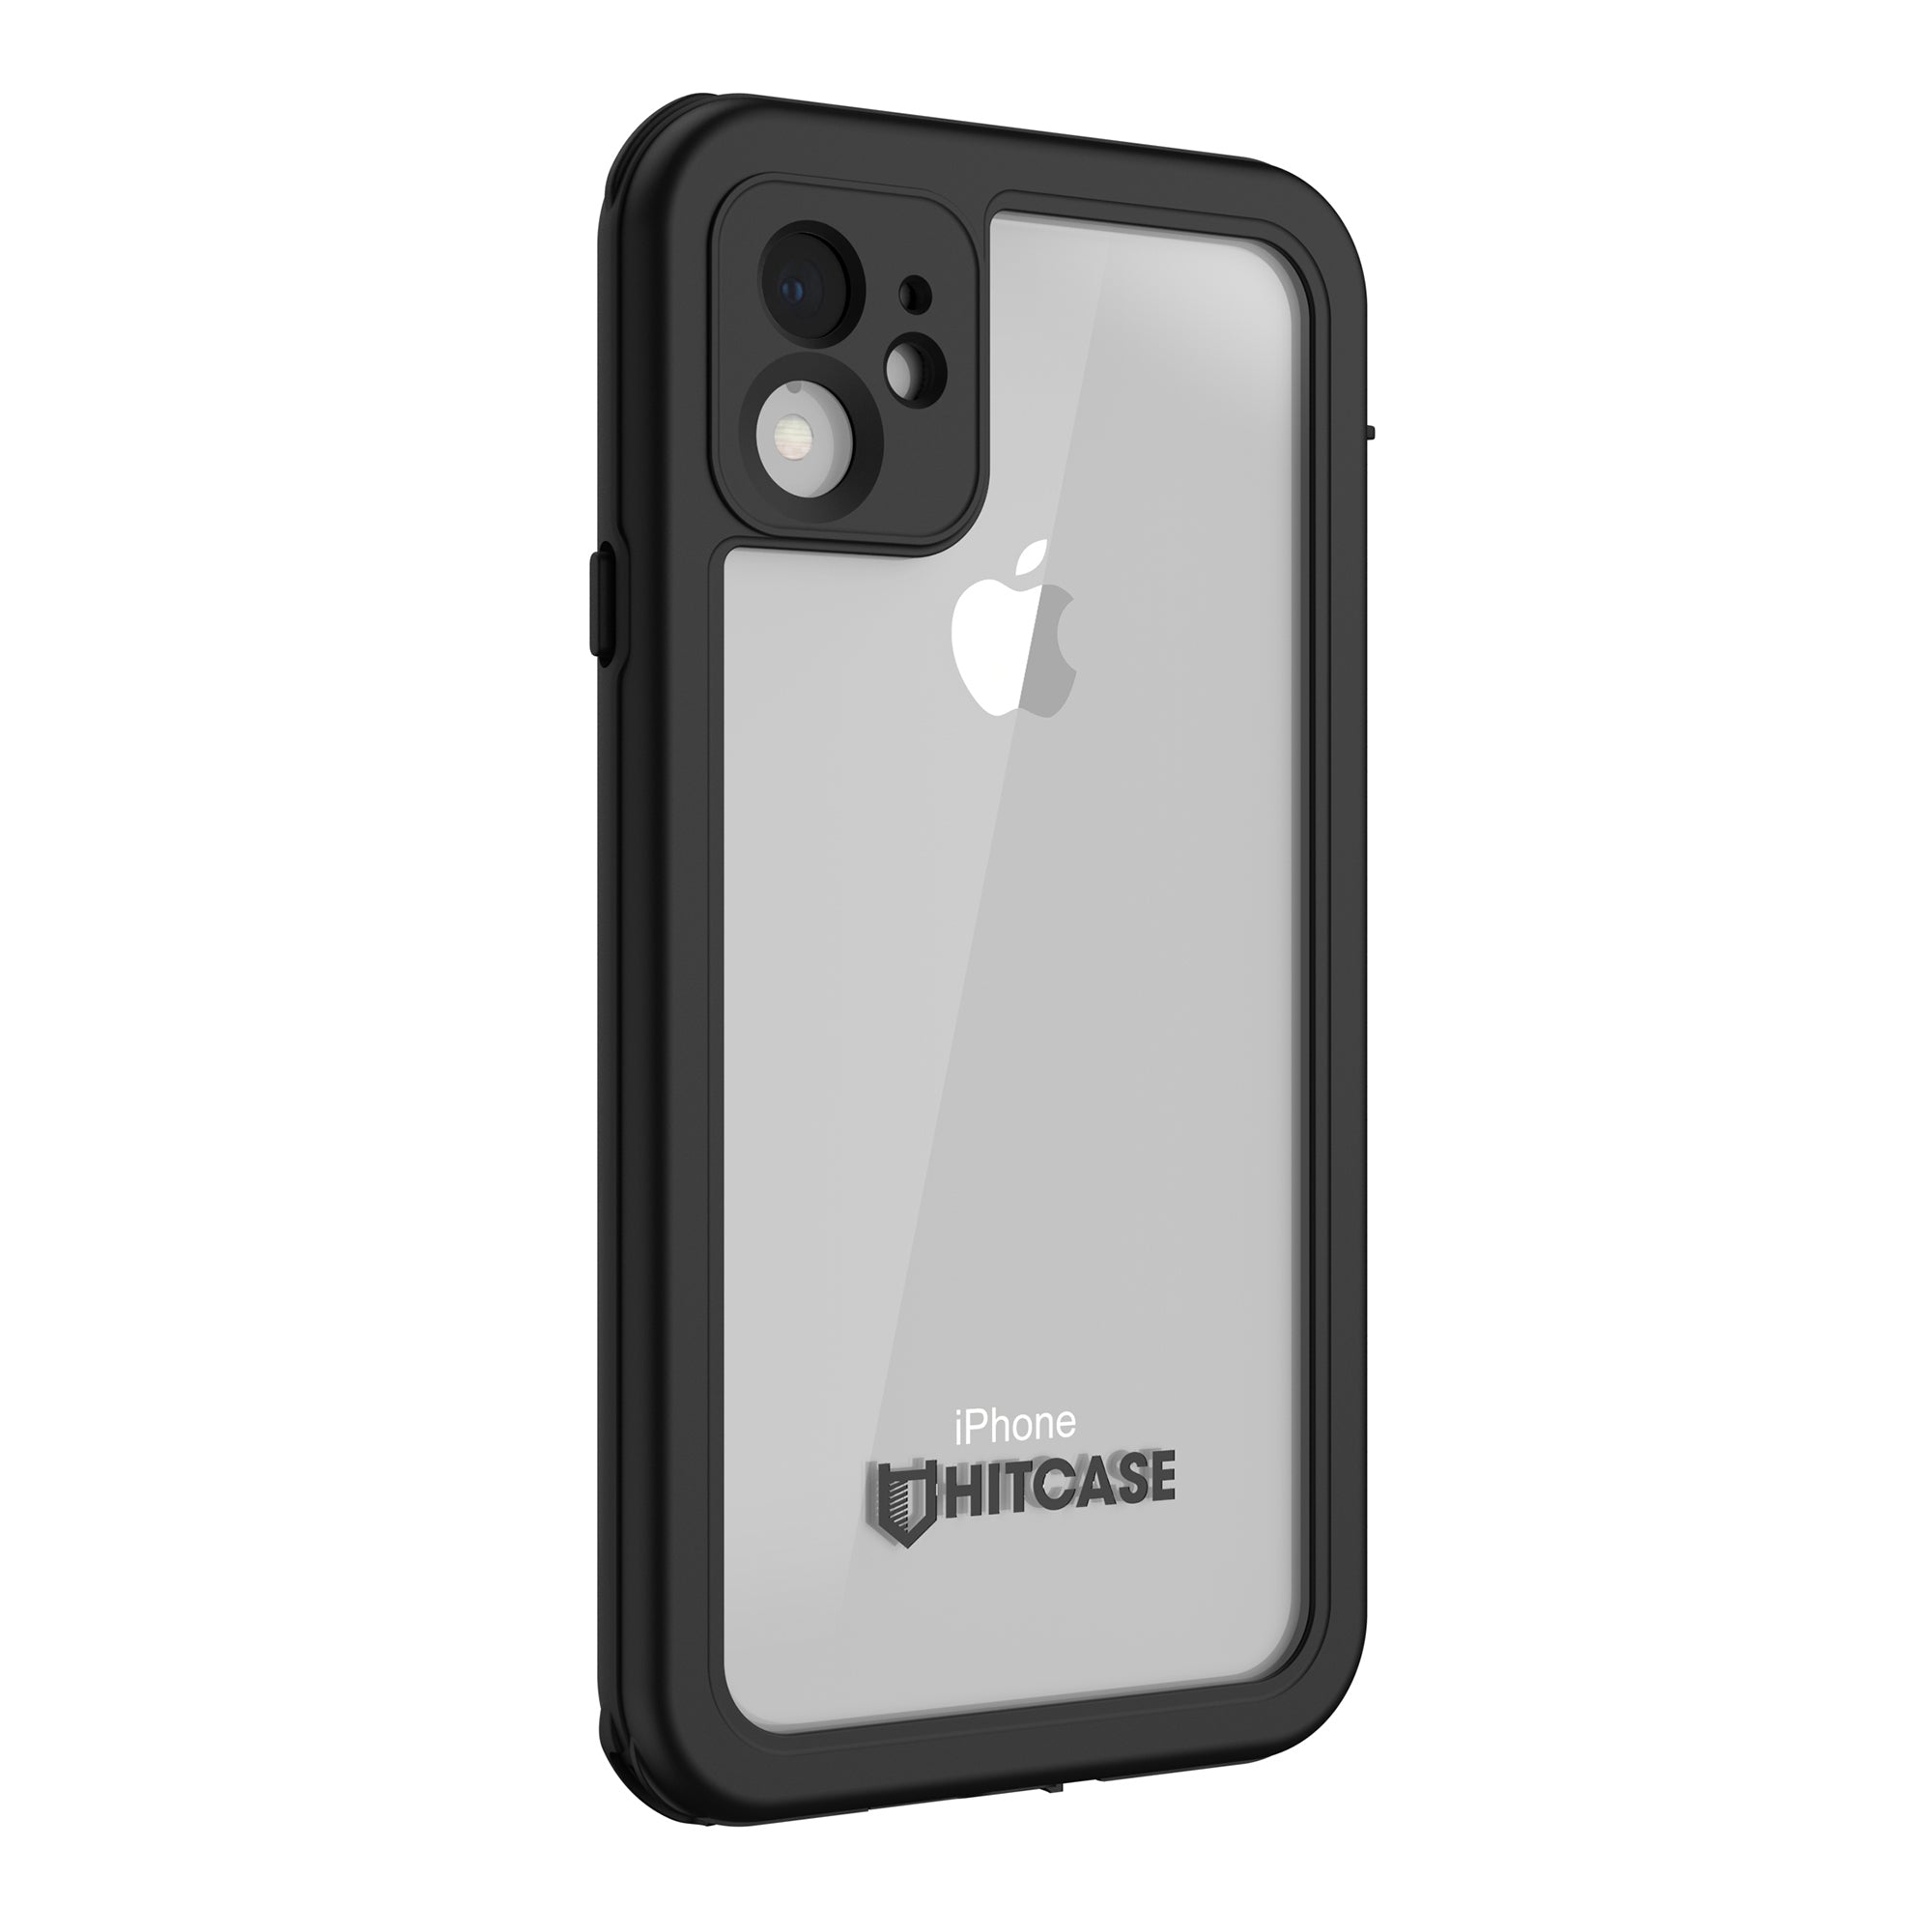 Thin black iPhone 11/XR case